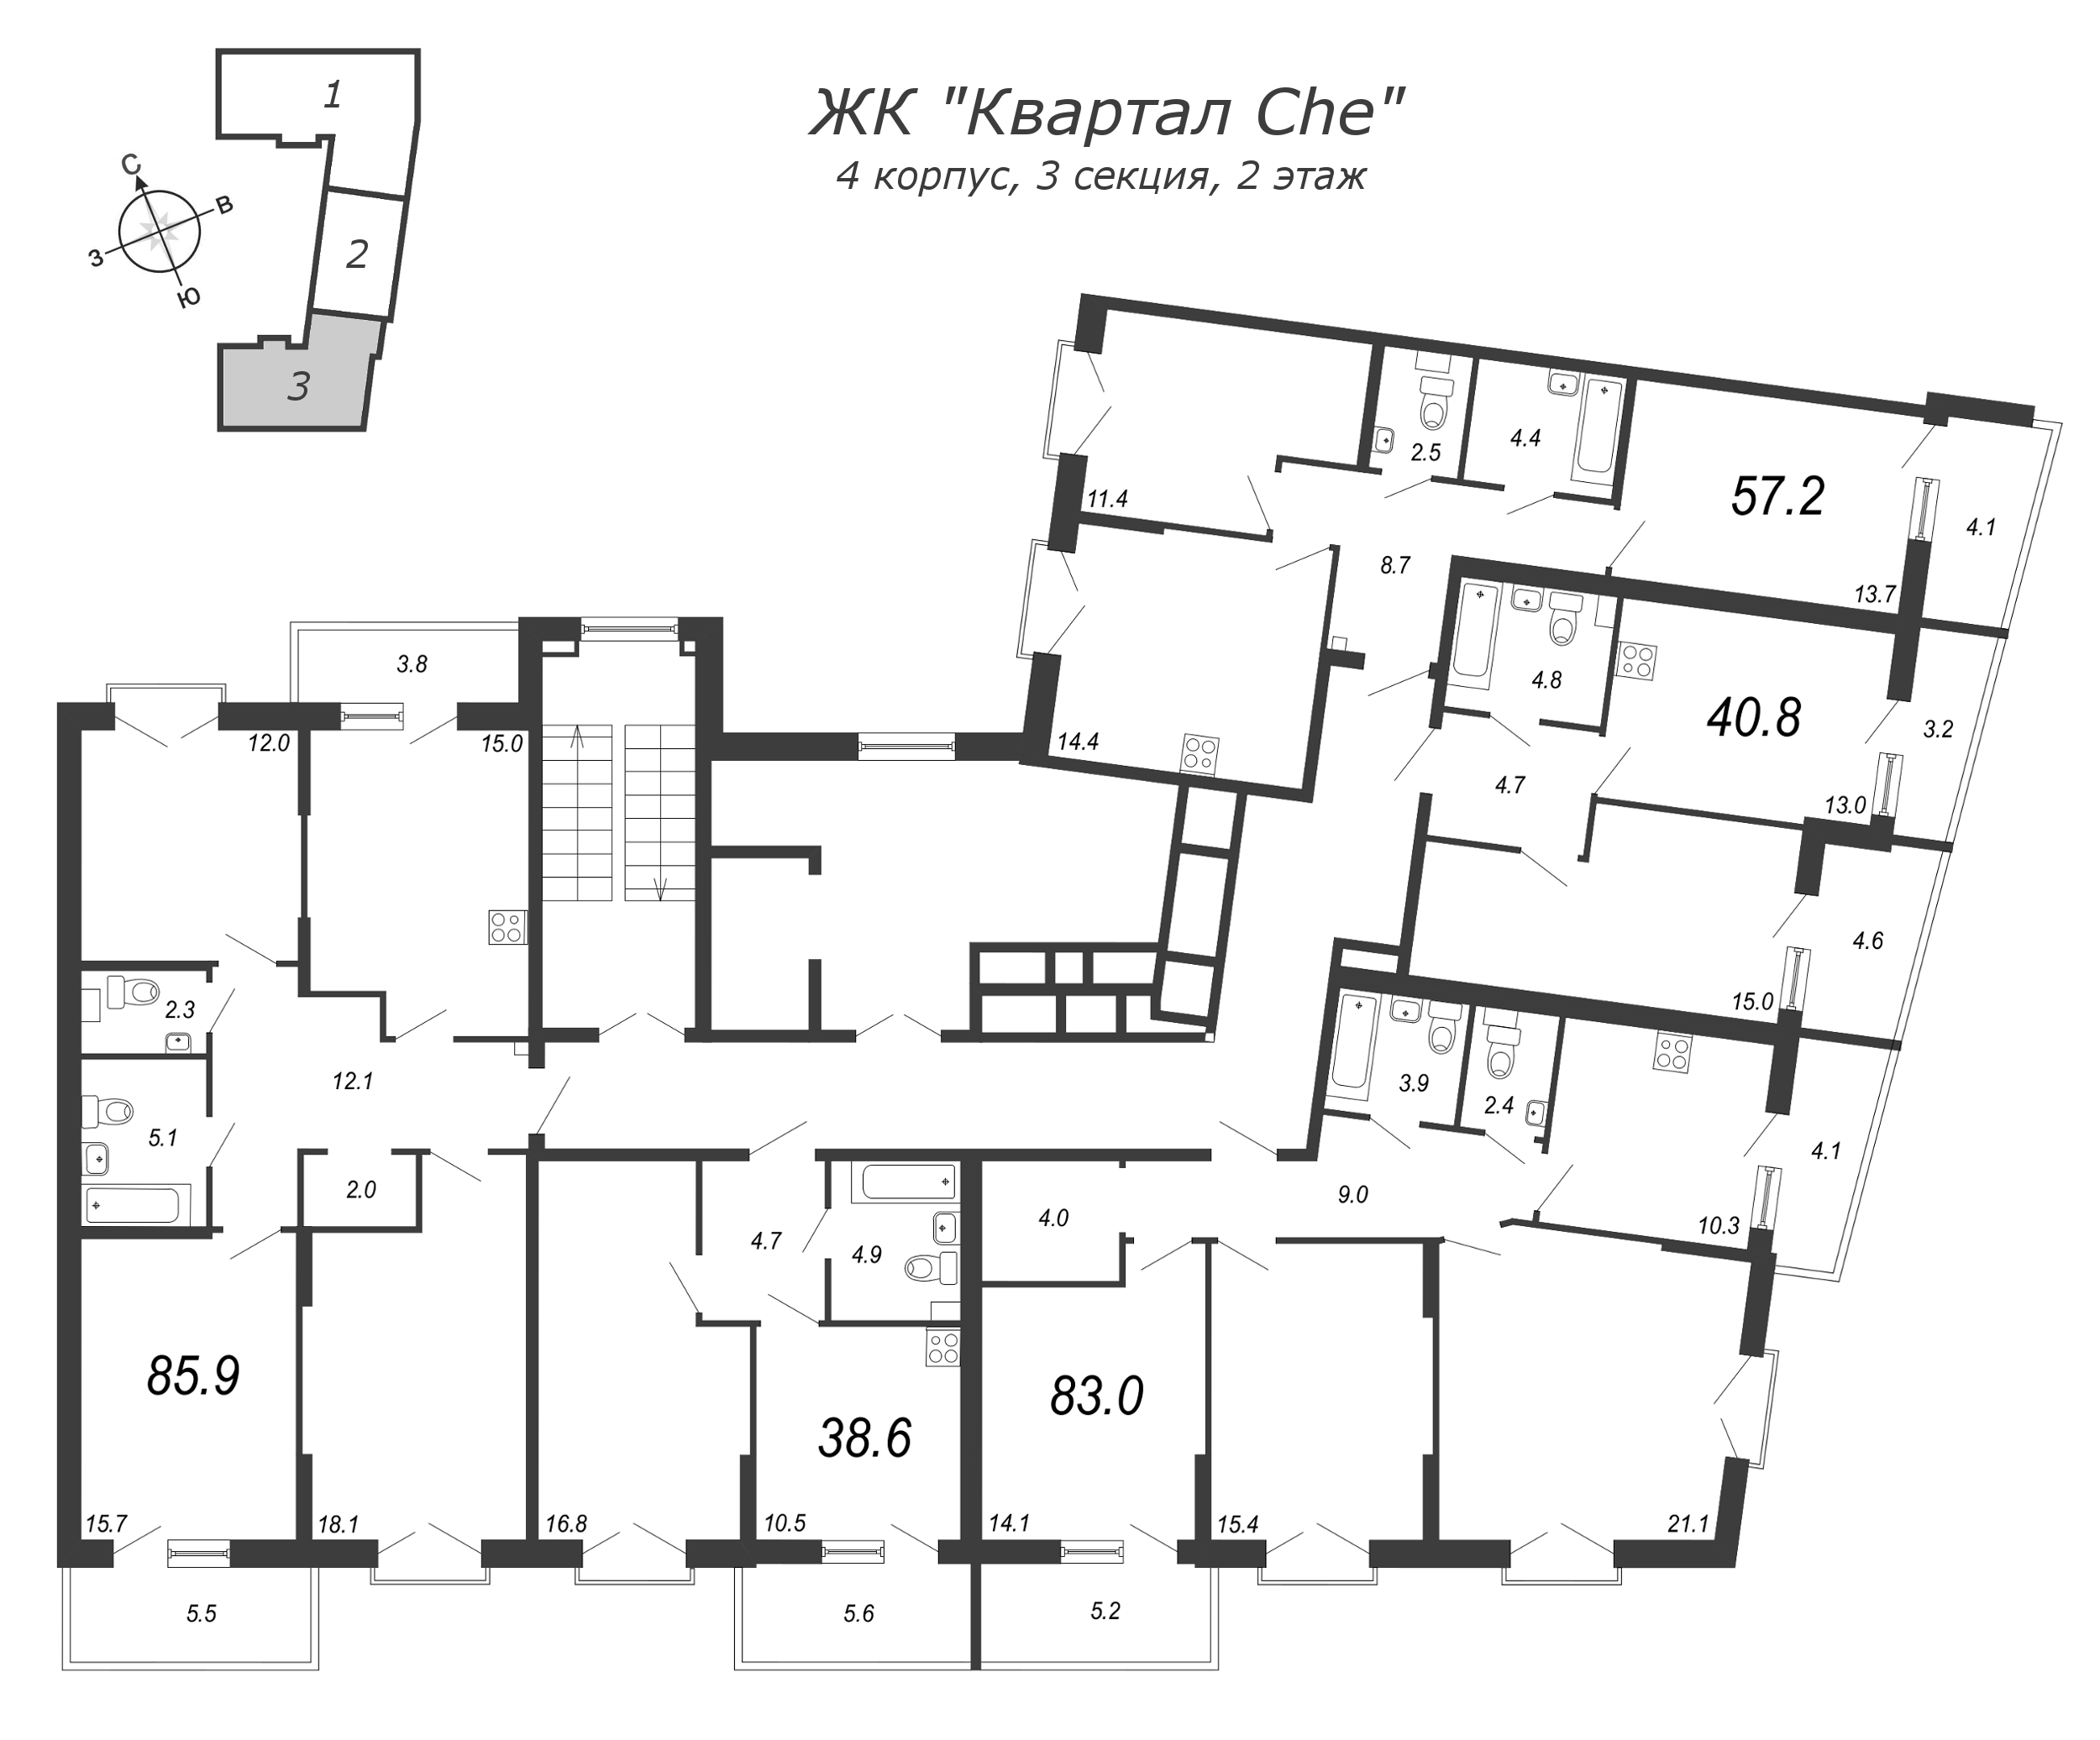 3-комнатная квартира, 86.3 м² в ЖК "Квартал Che" - планировка этажа